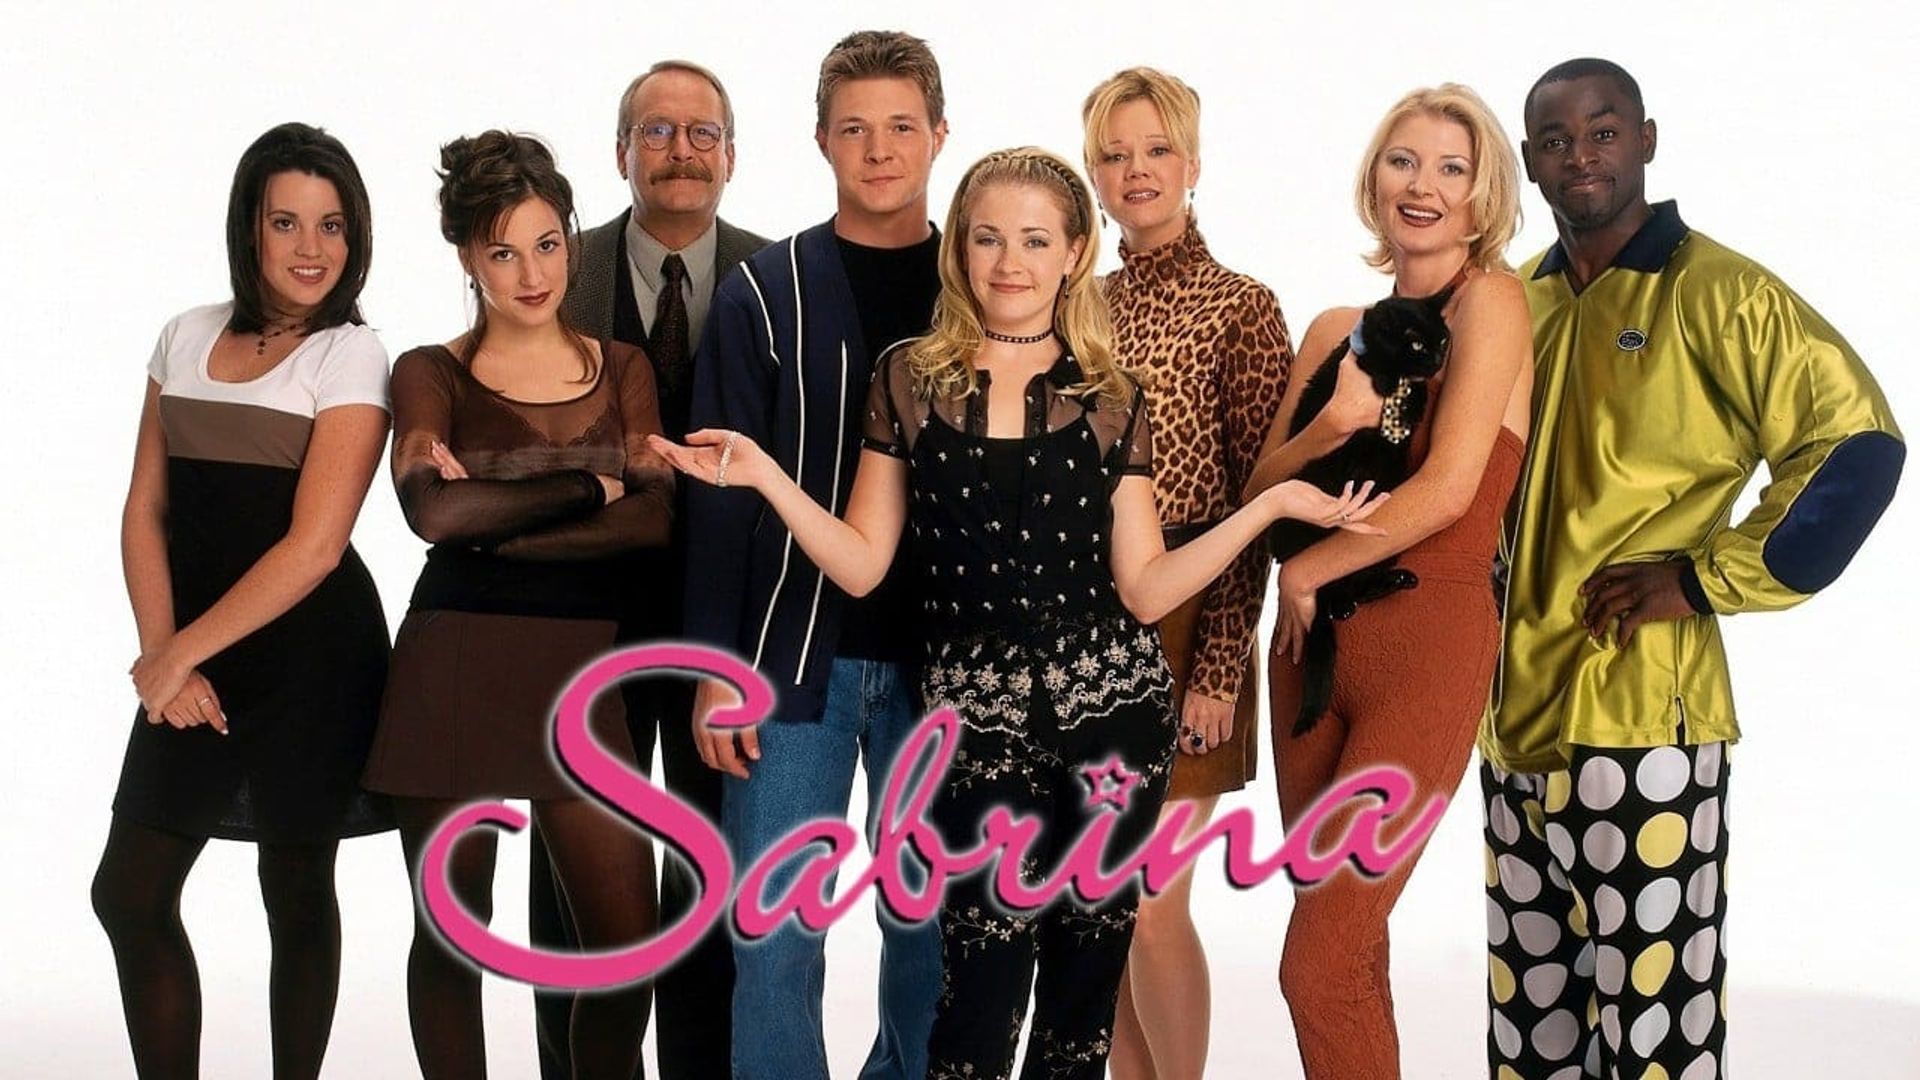 Sabrina the Teenage Witch background